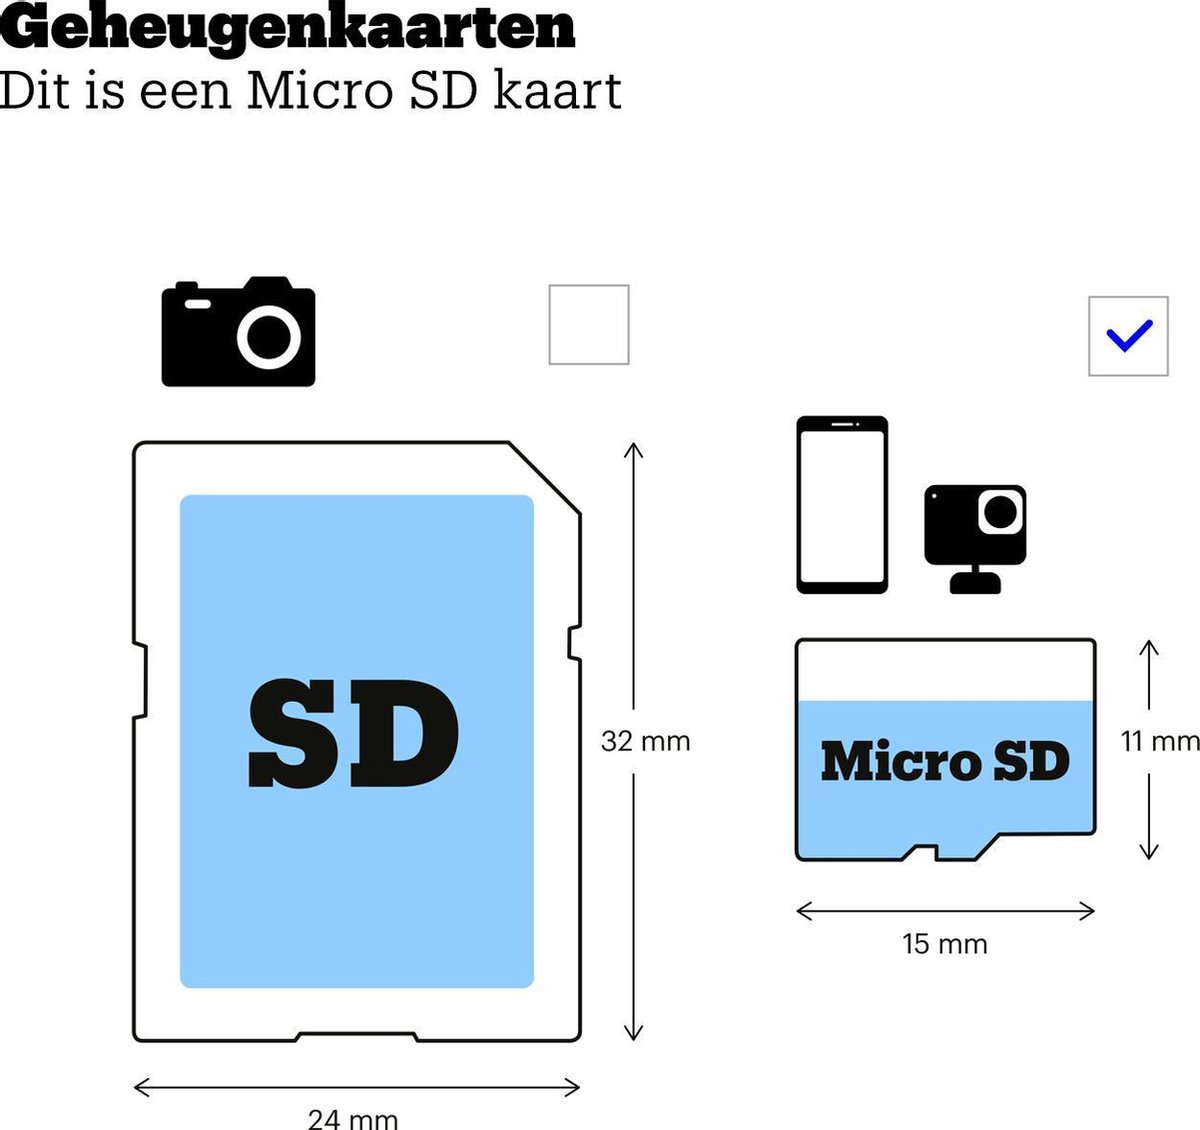  SanDisk 1TB Extreme microSDXC UHS-I Memory Card with